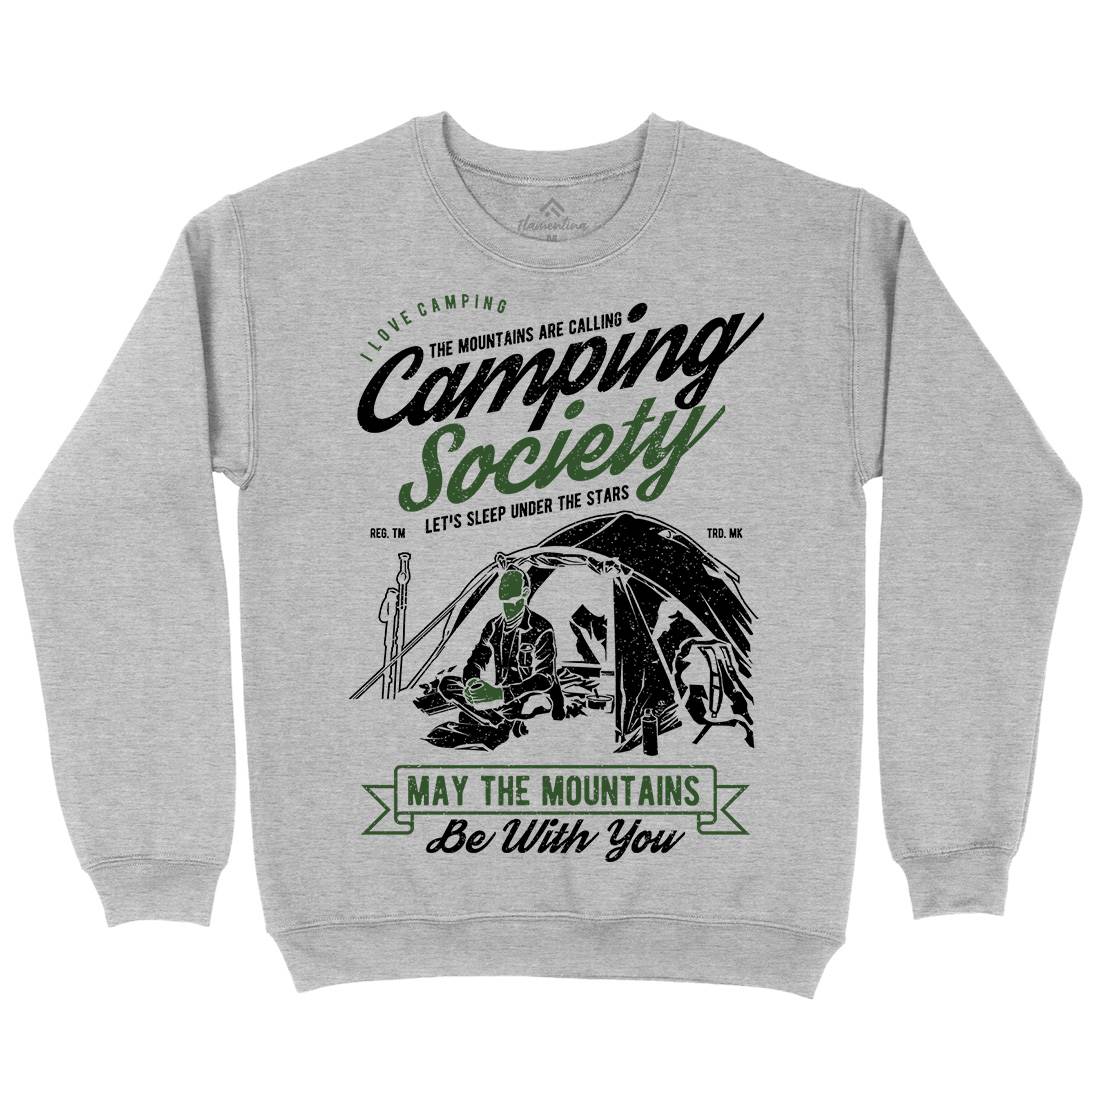 Camping Society Kids Crew Neck Sweatshirt Nature A631